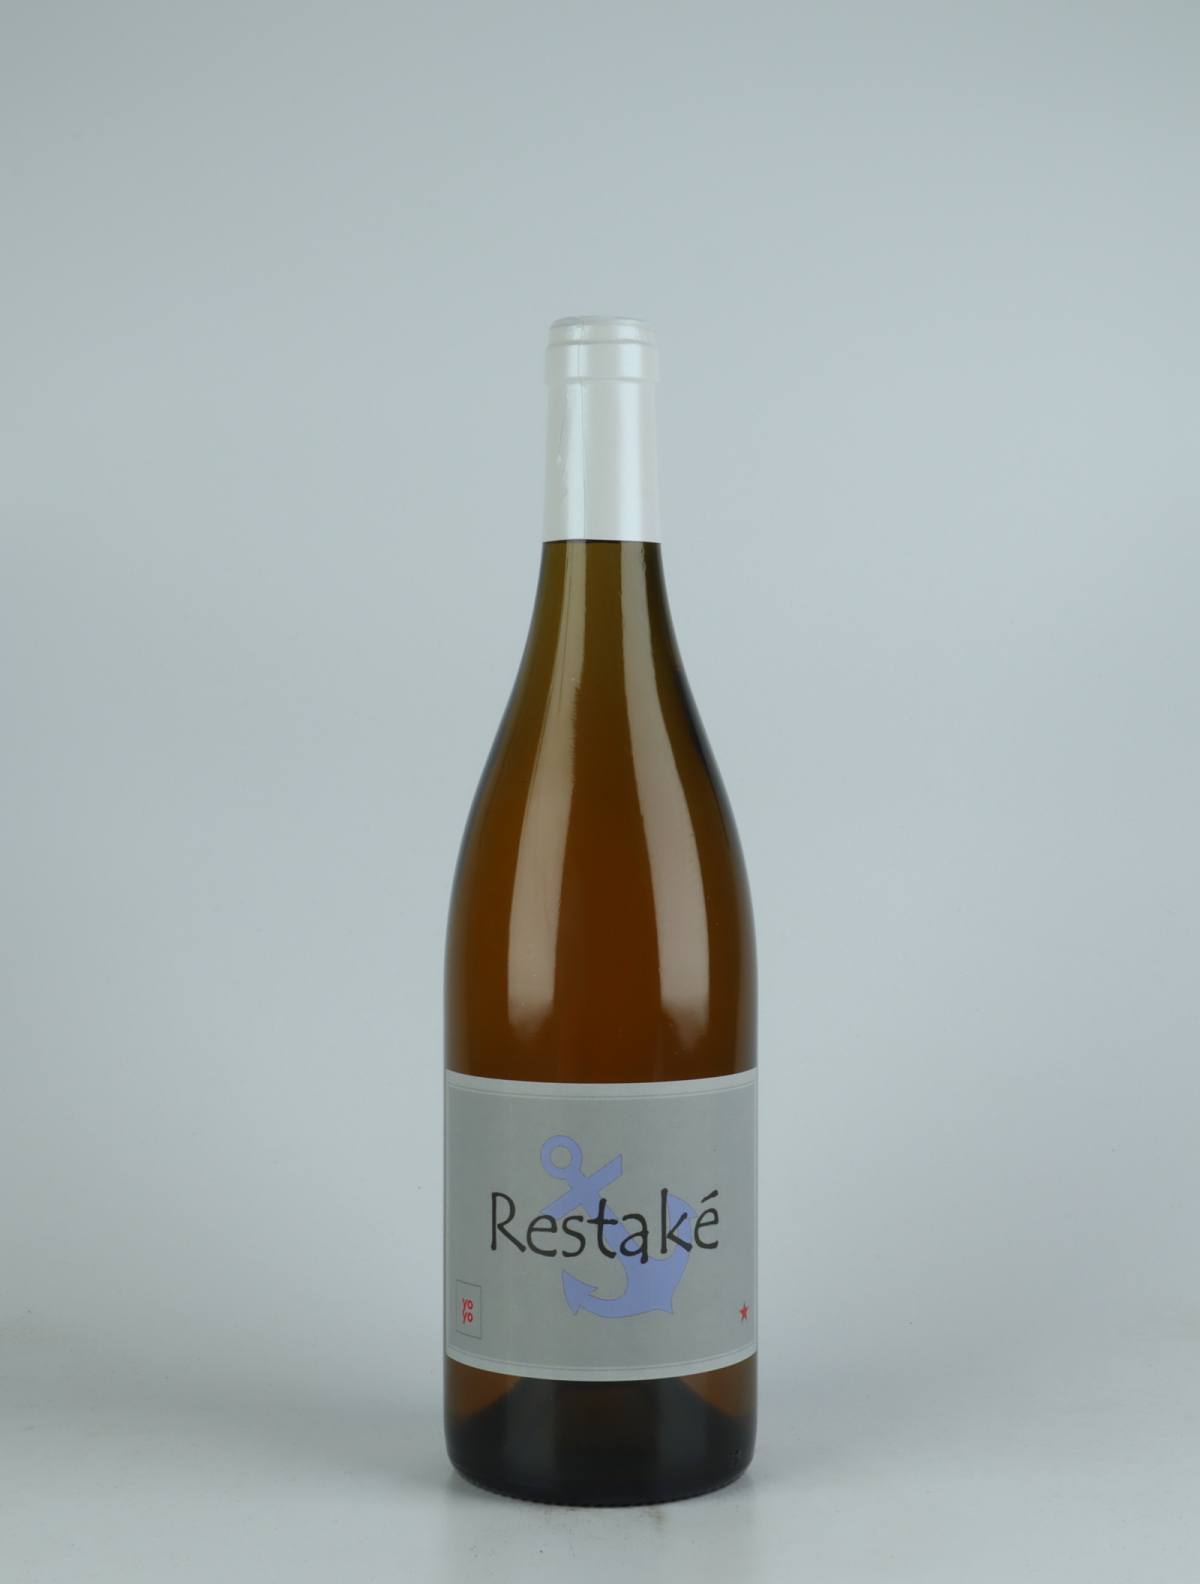 A bottle 2021 Restaké White wine from Domaine Yoyo, Rousillon in France